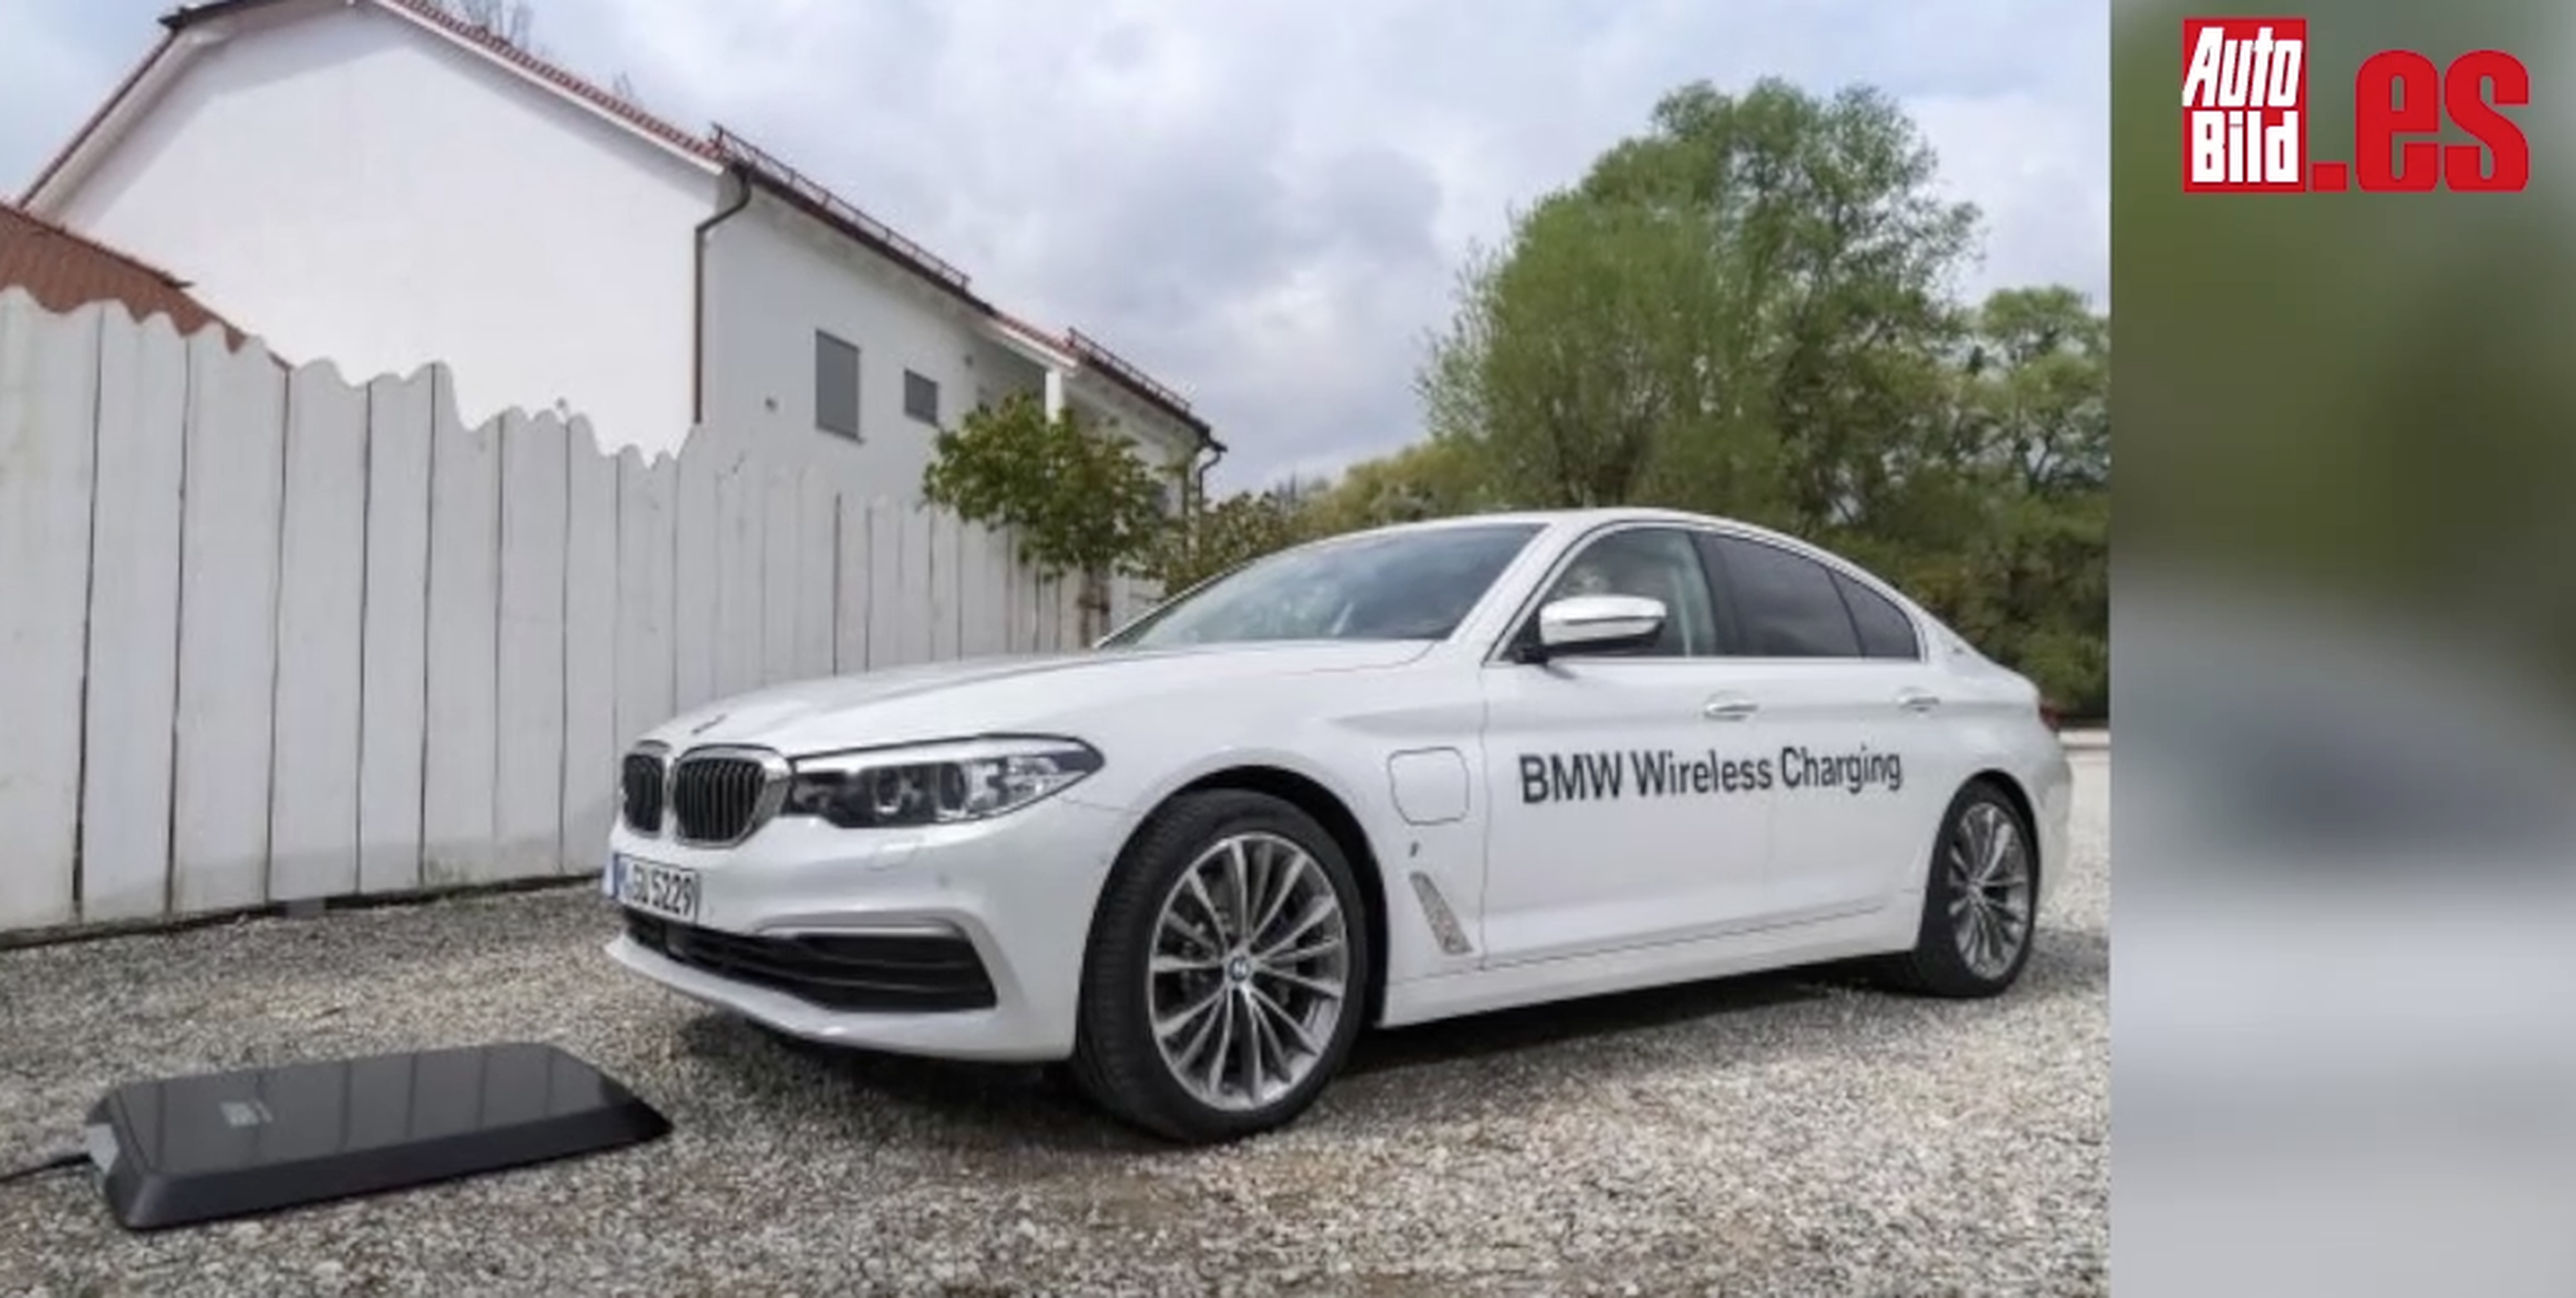 VÍDEO: ¿Cómo funciona la carga inalámbrica de BMW?